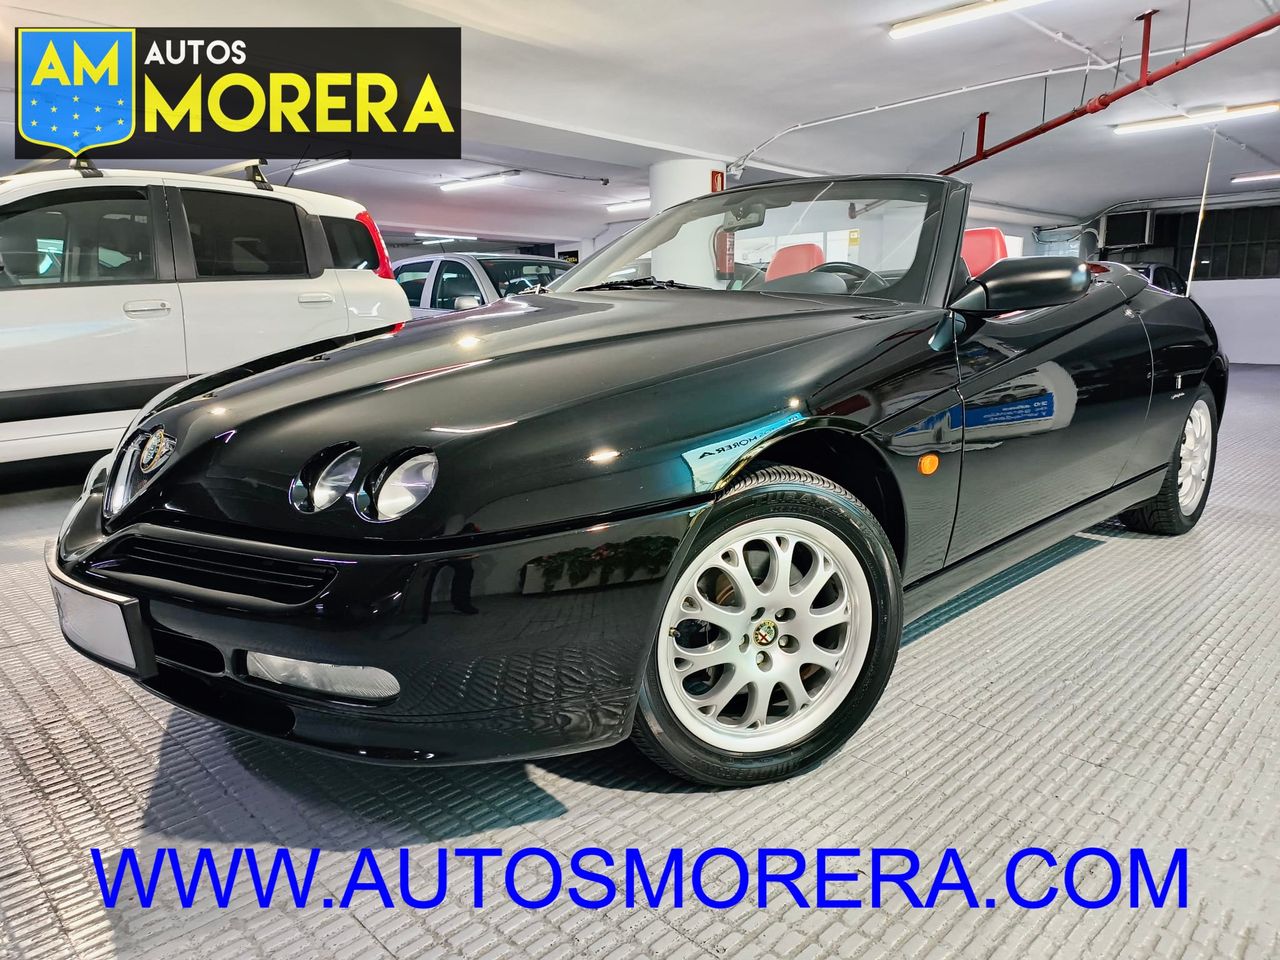 Alfa Romeo Spider 2.0 T.Spark 150cv. Impecable. De colección.   - Foto 1